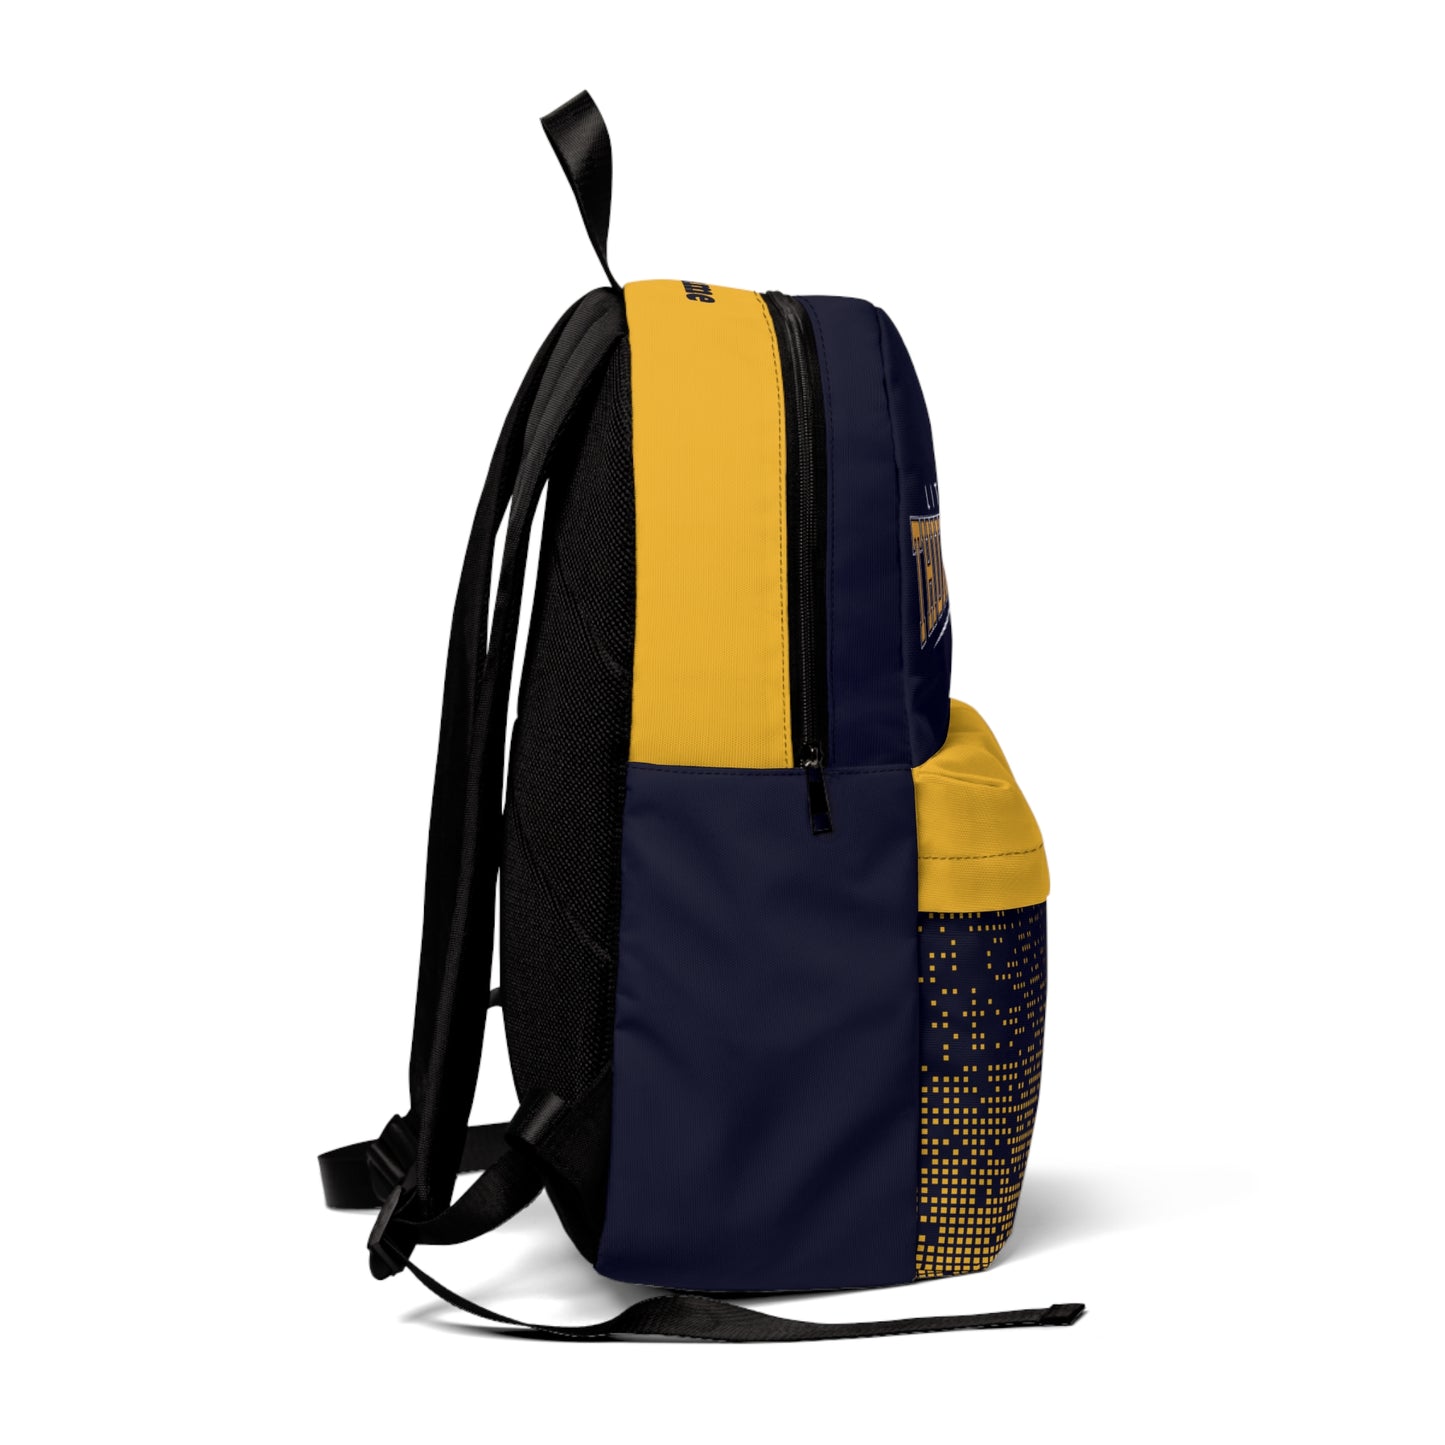 Custom bolts backpack